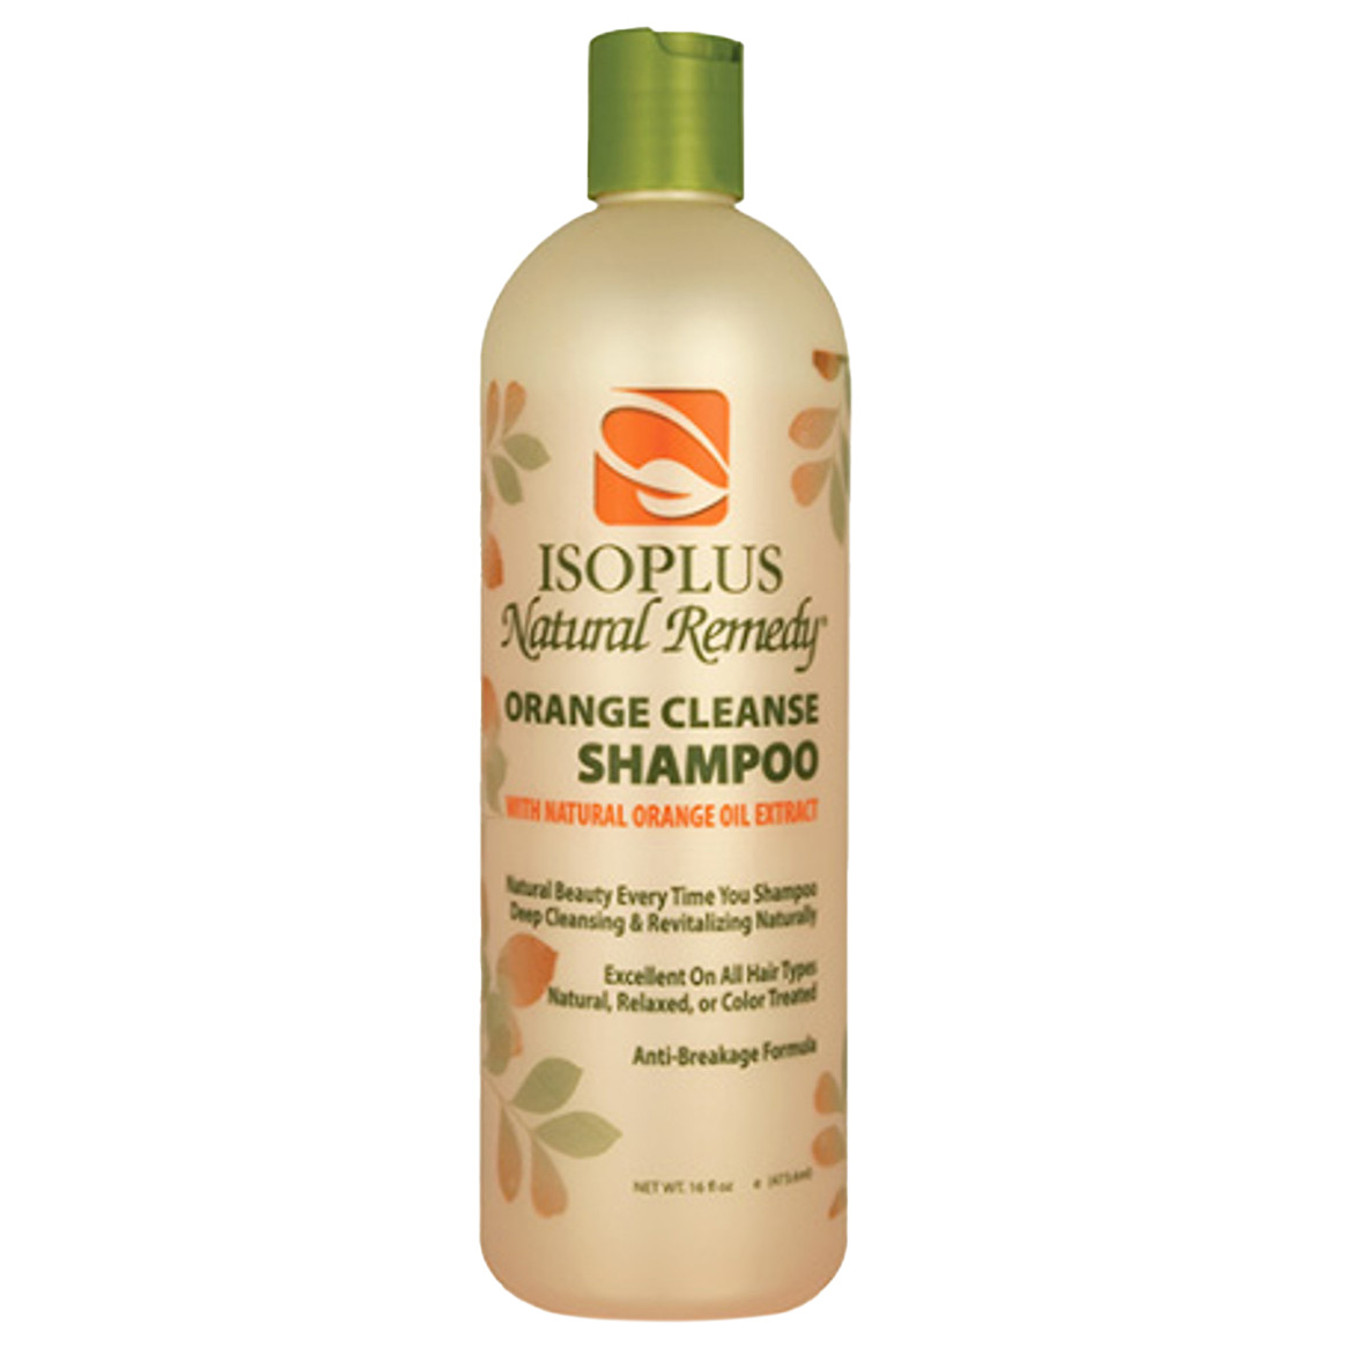 ISOPLUS Natural Remedy Orange Cleanse Shampoo (16 oz)